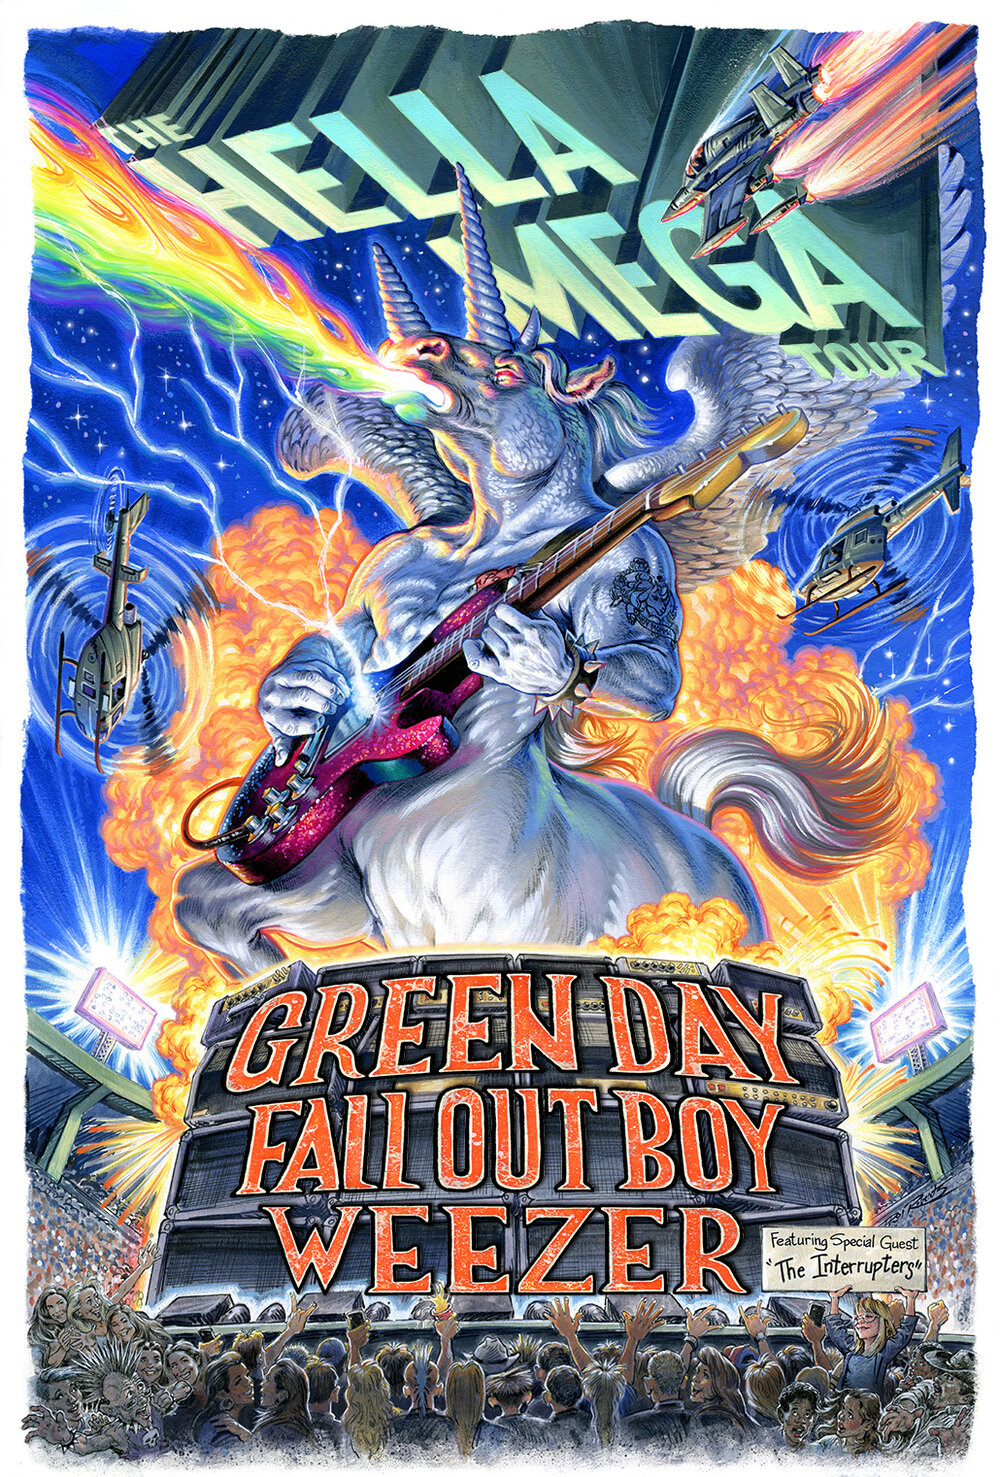 Hella Mega Tour Poster